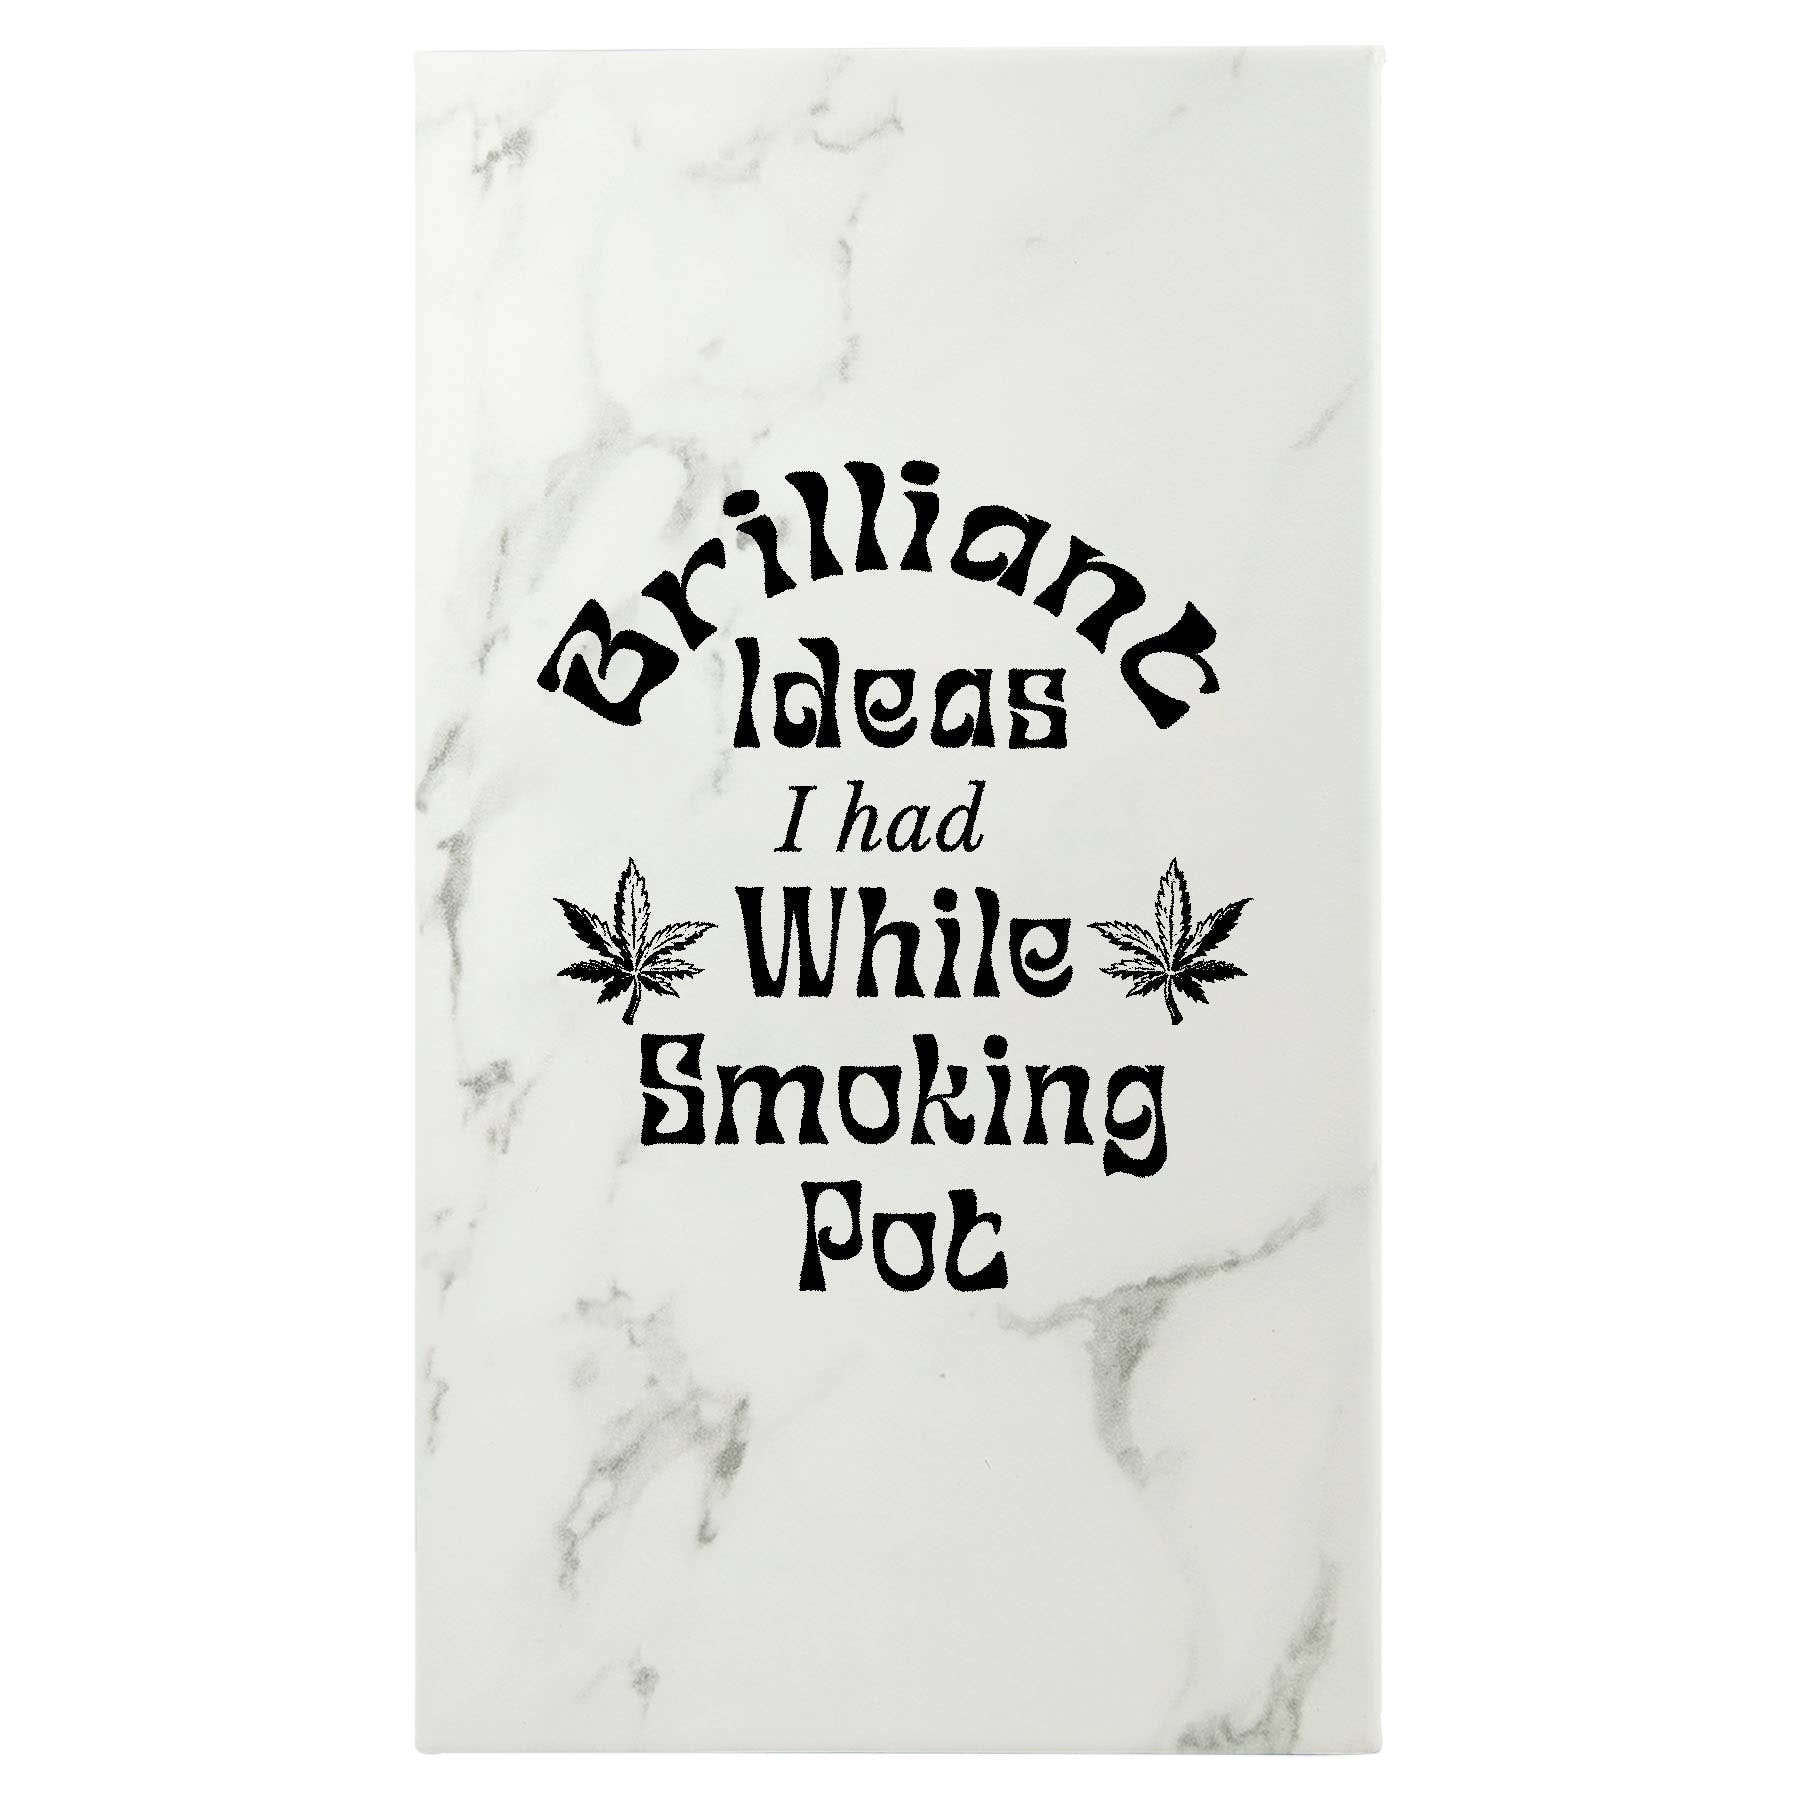 Brilliant Ideas I Had While Smoking Pot journal: White Marble